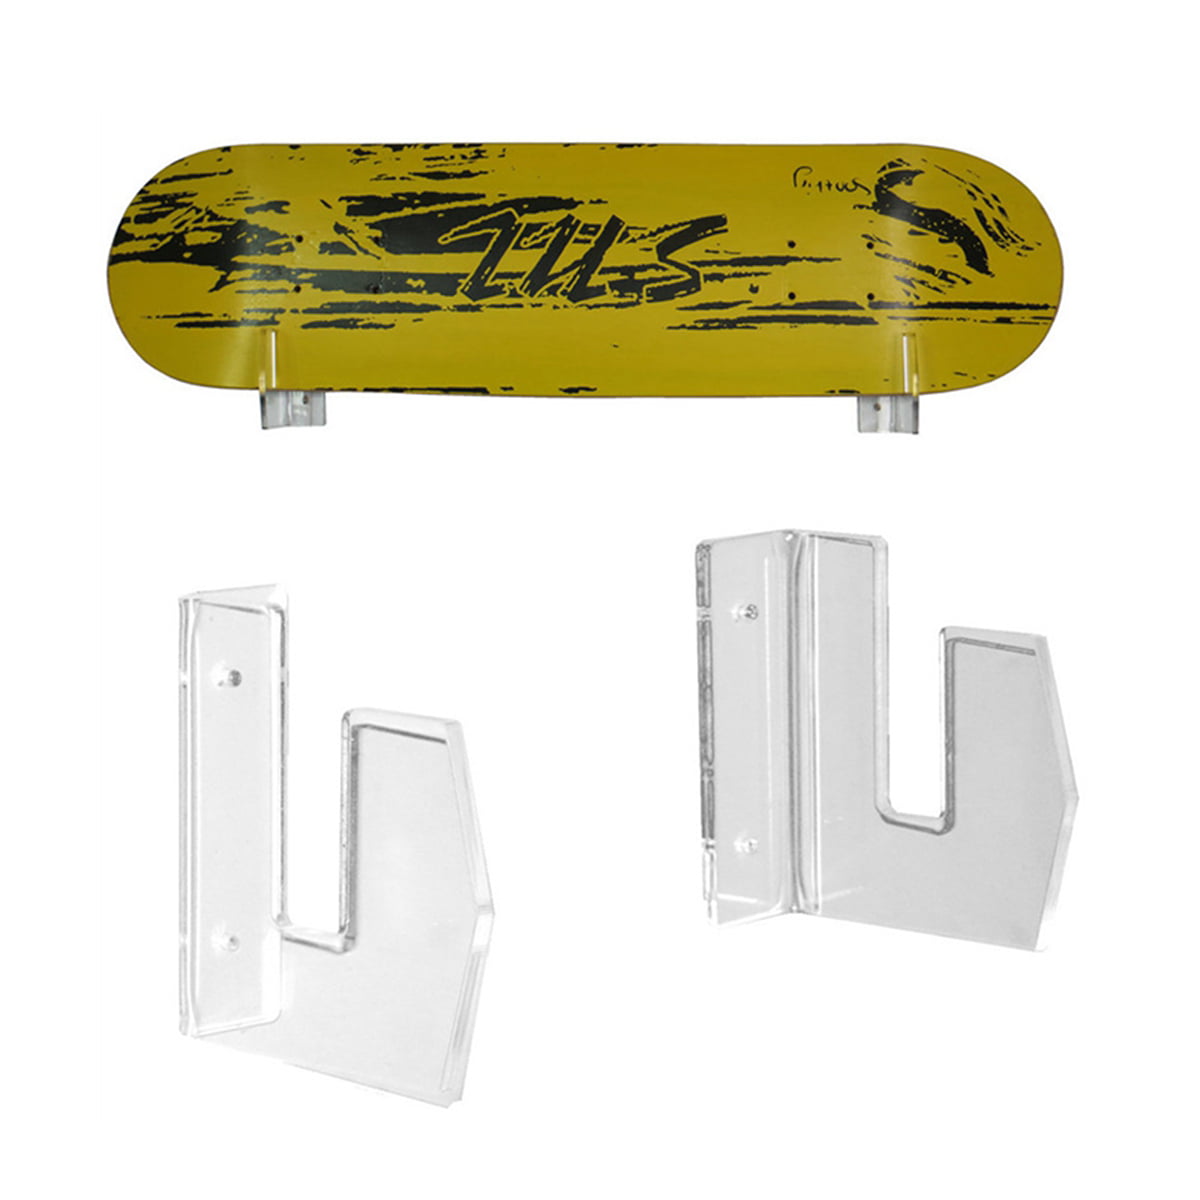 2 Pcs Acrylic Skateboard Holder Hanger Display Rack Bracket Shelf Hardware 